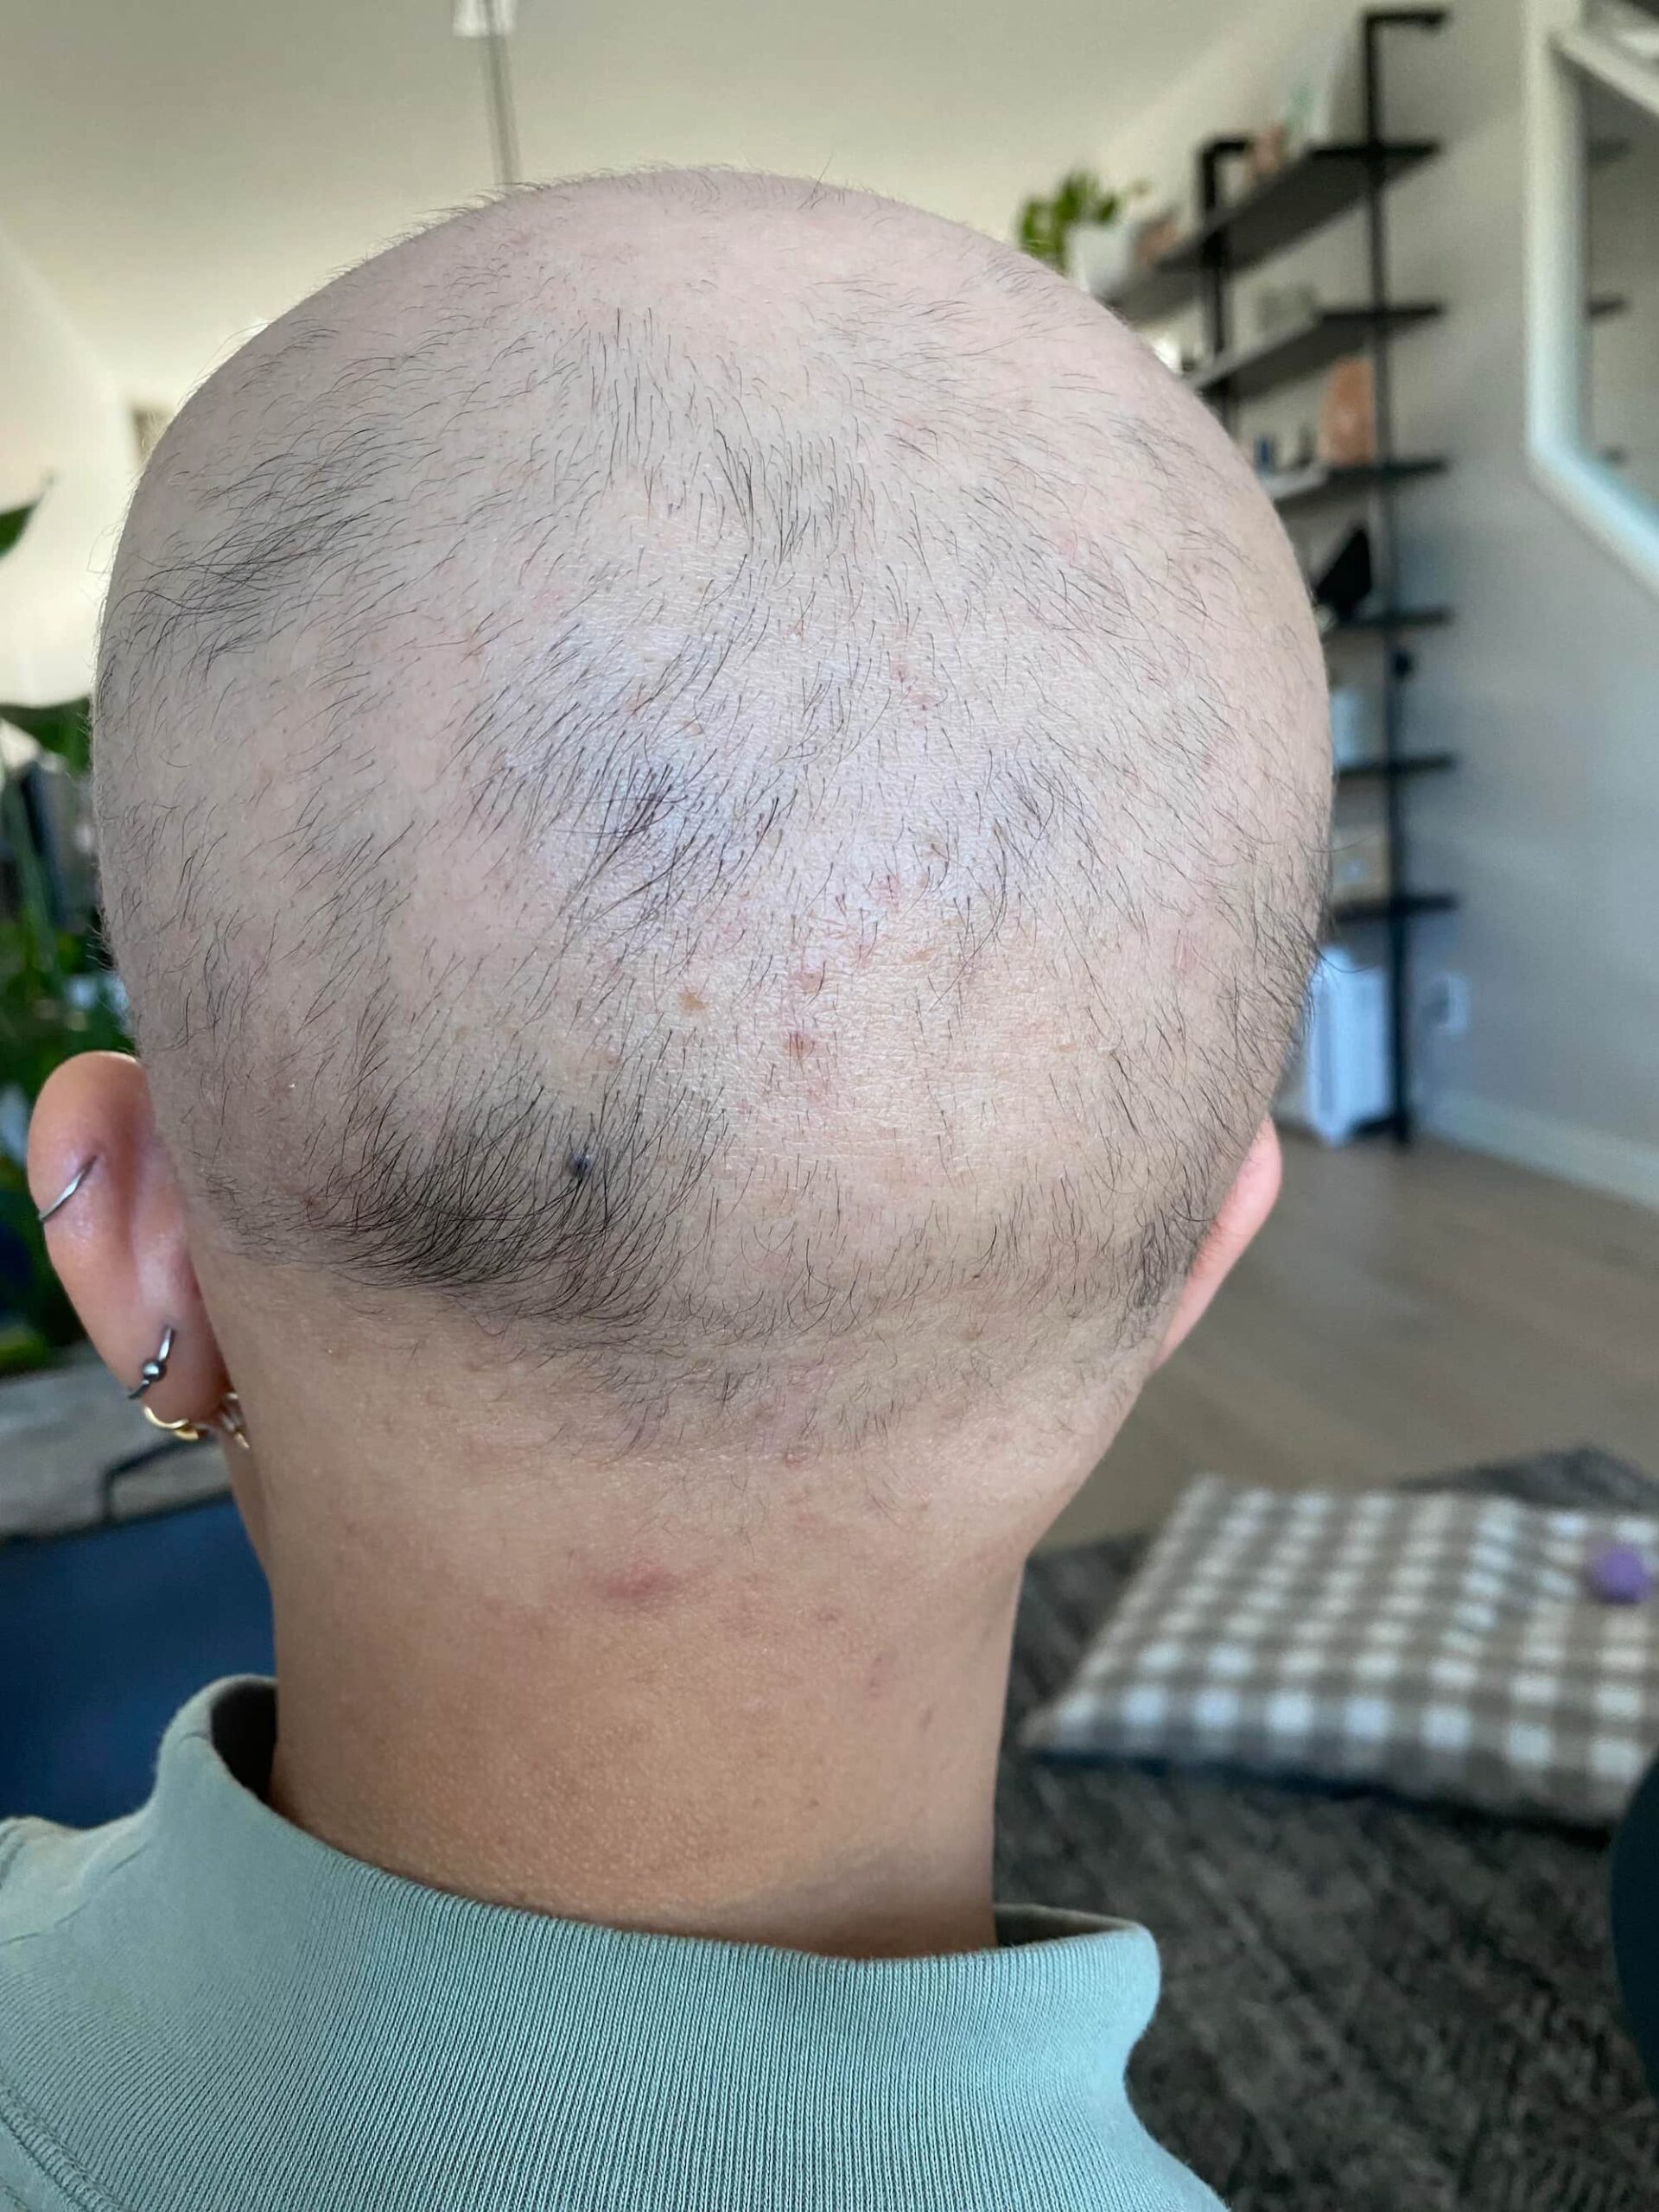 deuruxolitinib alopecia areata results 06 scaled - Alopecia Areata Treatment: What Future Holds